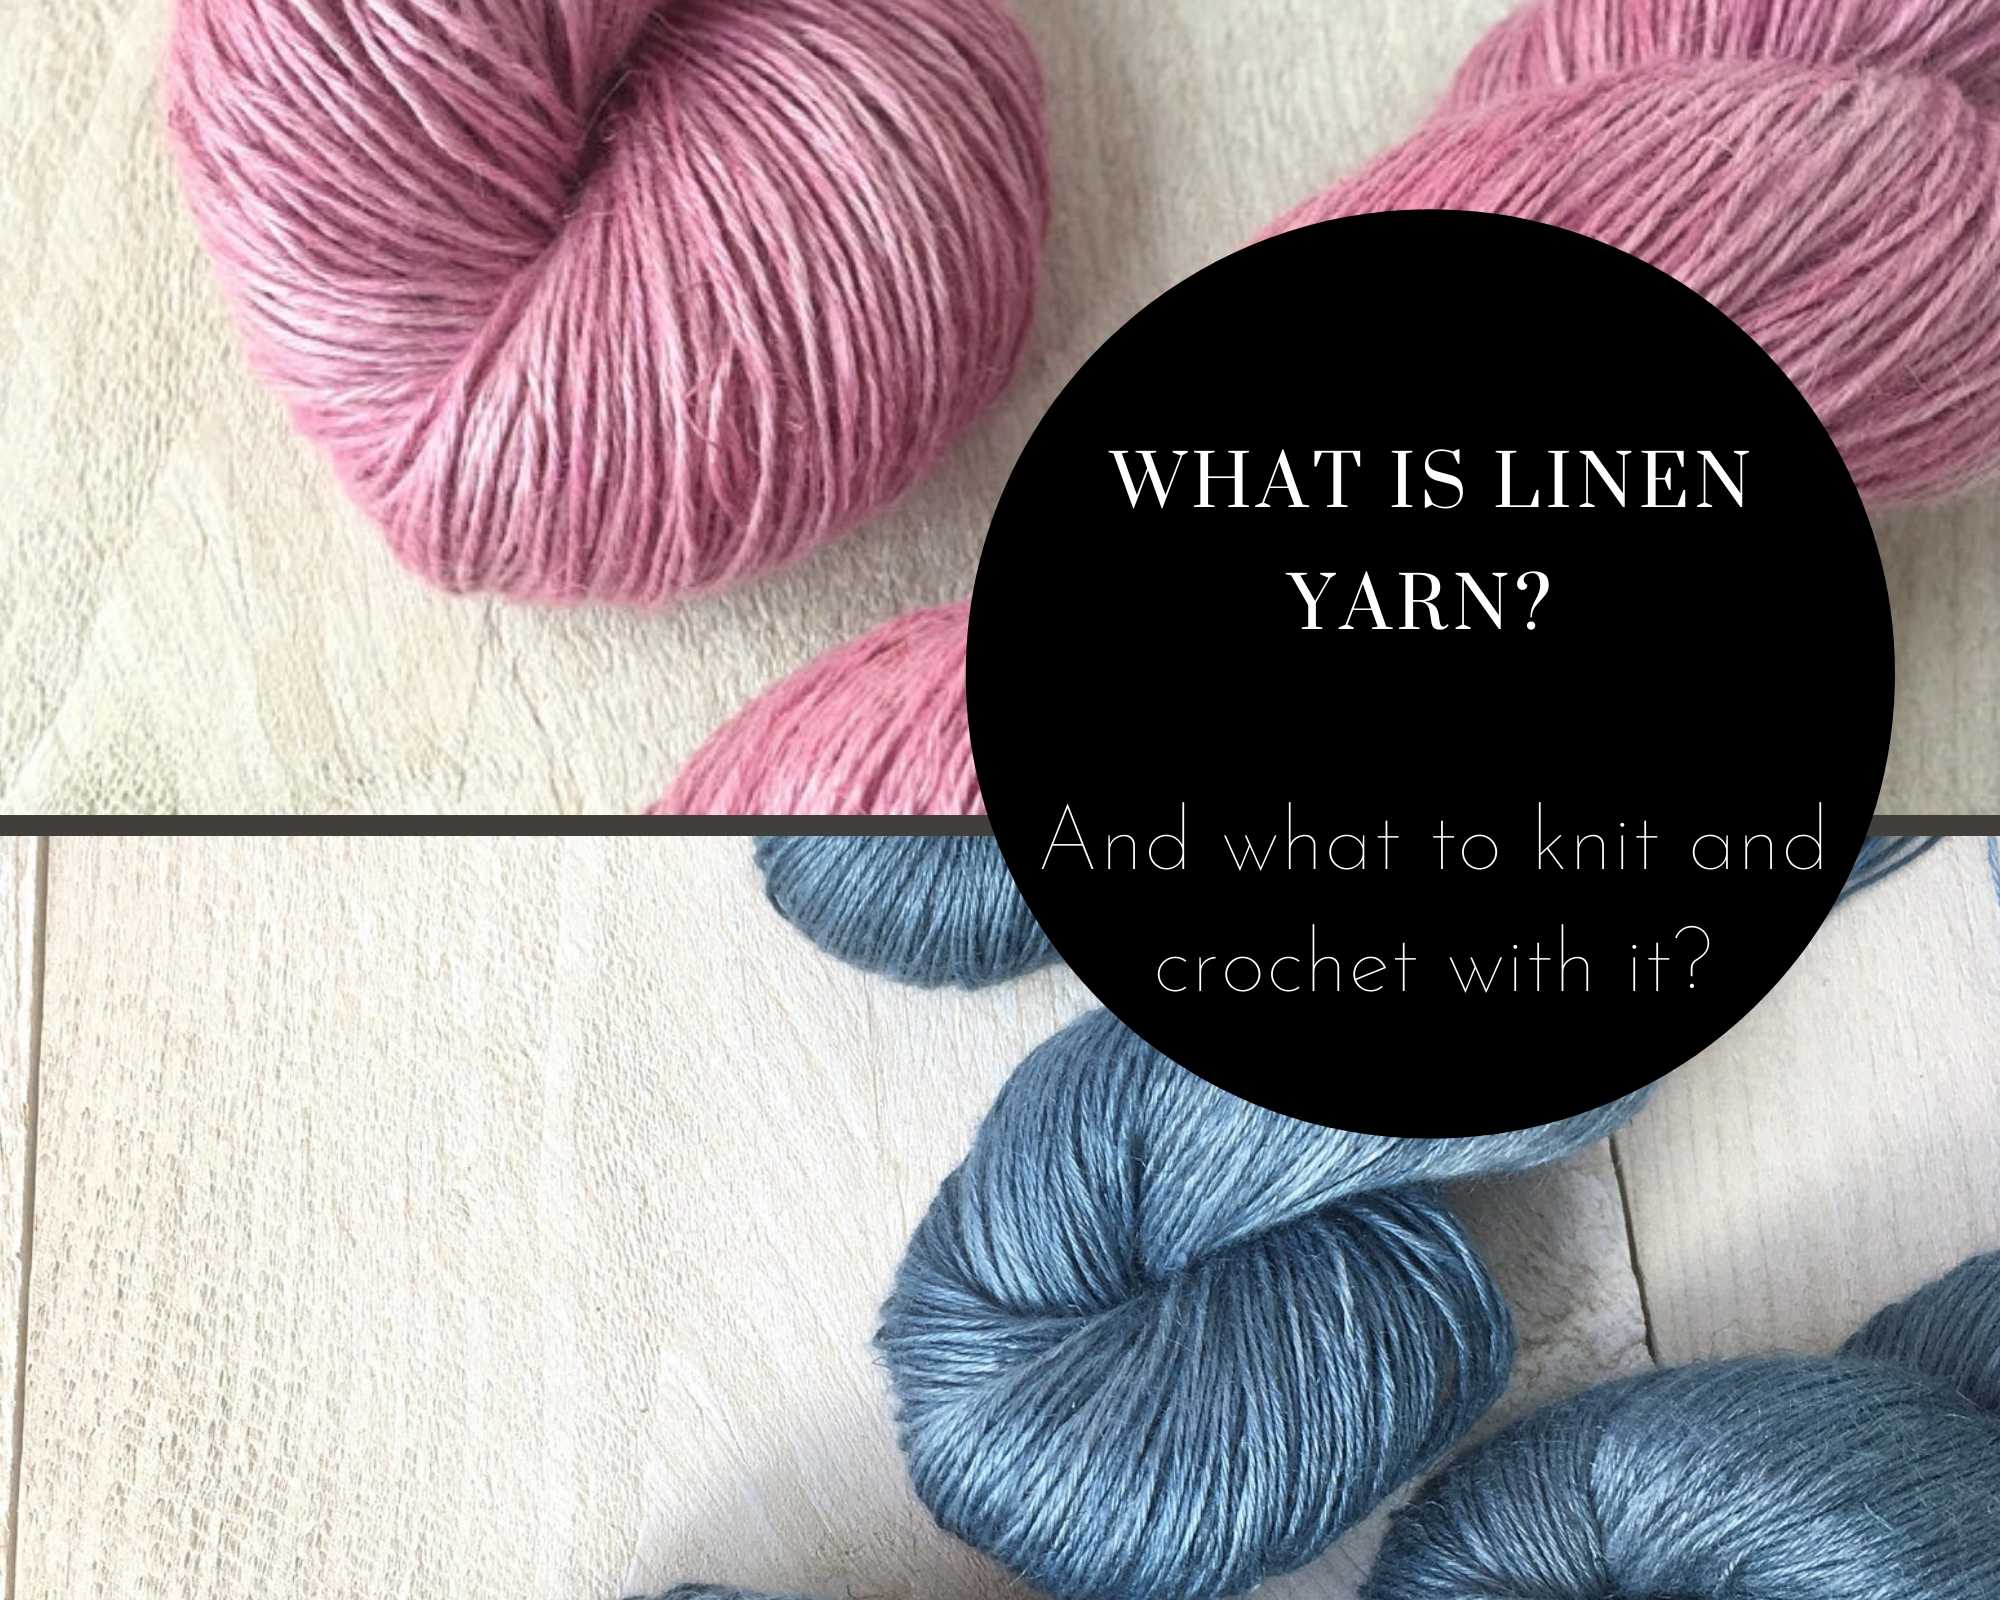 True Linen Yarn from the Netherlands